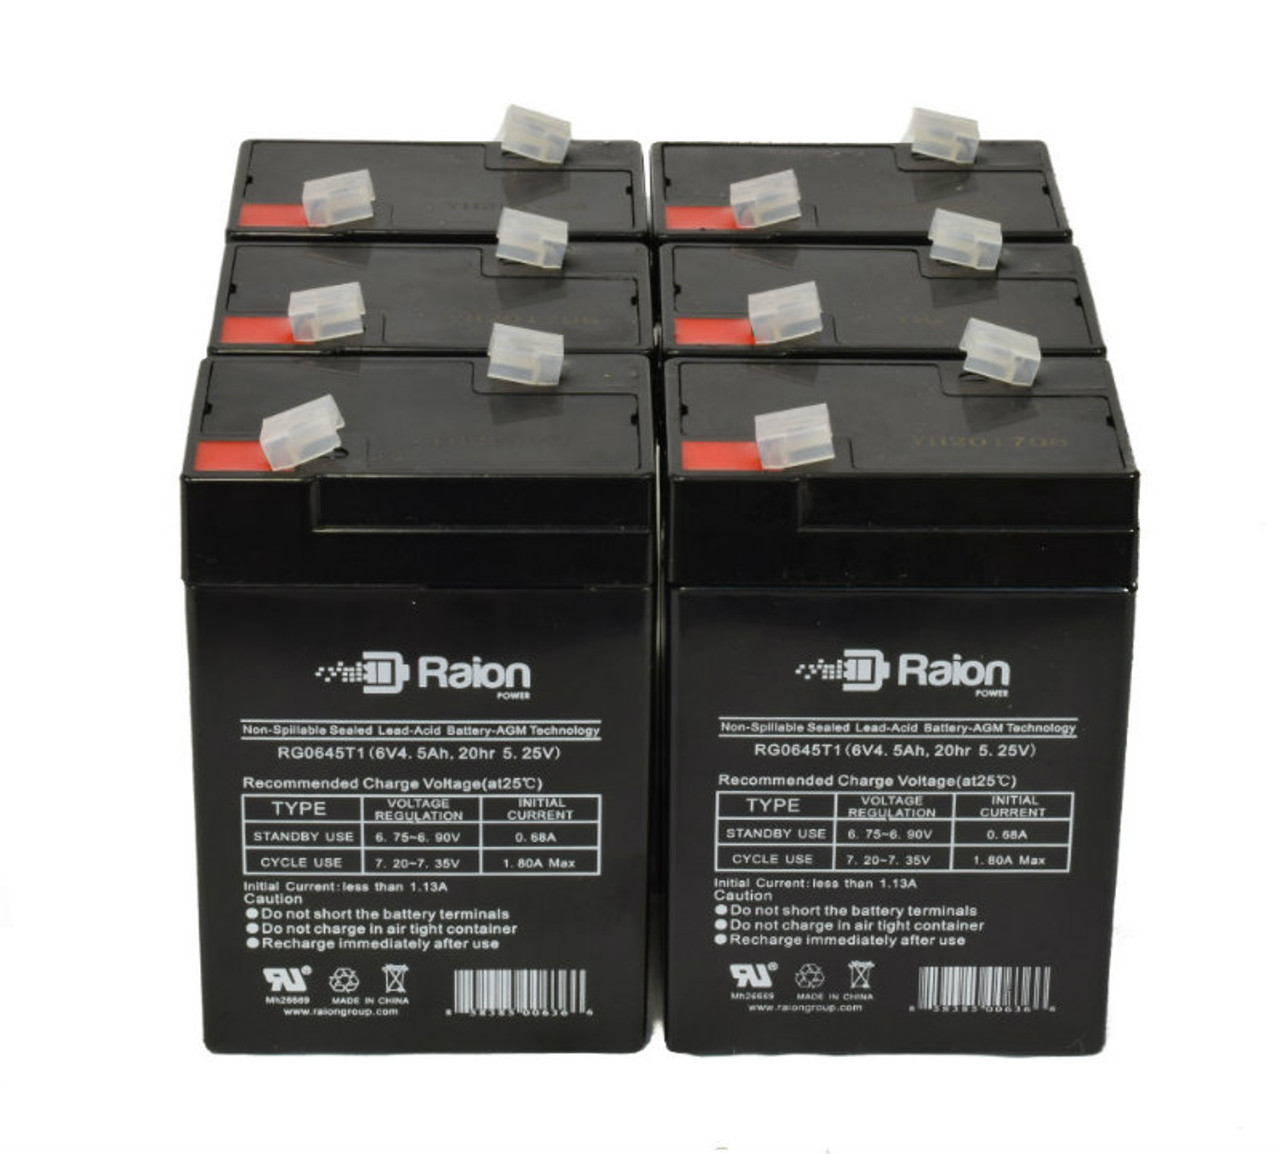 Raion Power 6V 4.5Ah Replacement Emergency Light Battery for Emergi-Lite 12000 - 6 Pack